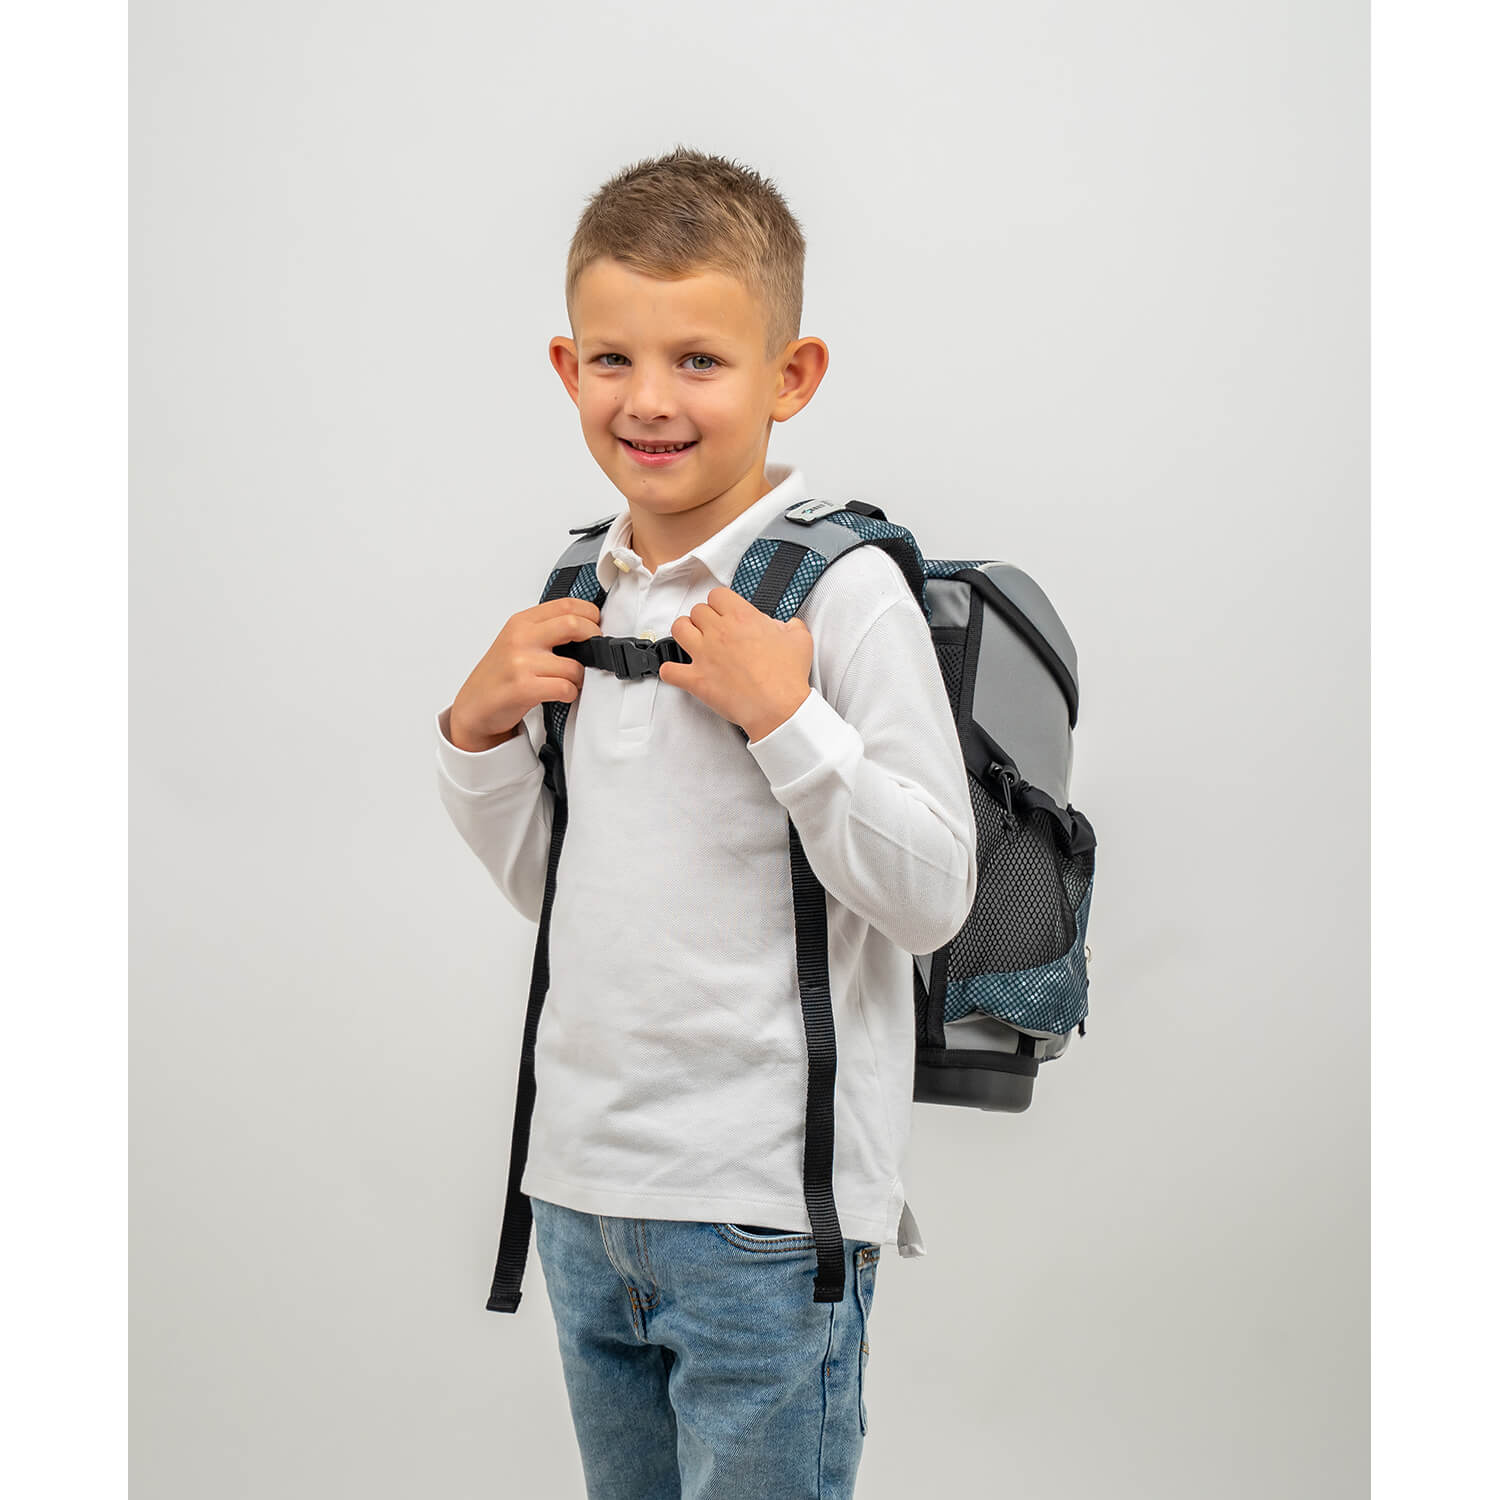 Mini-Fit Red Dots schoolbag set 5 pcs with GRATIS keychain